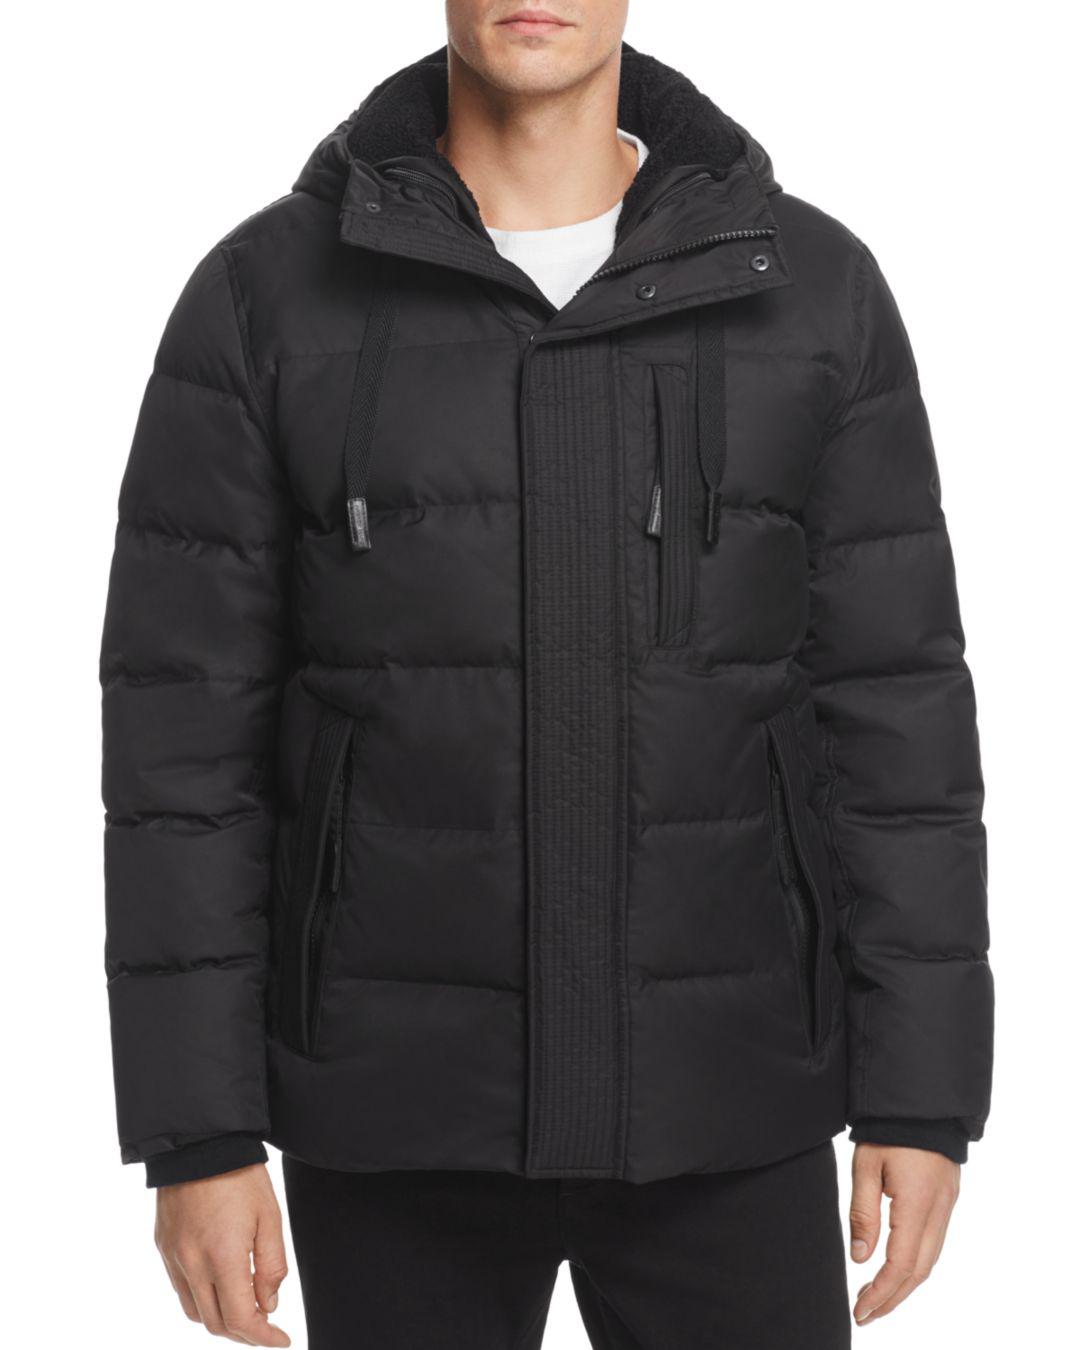 Andrew Marc Groton Hooded Puffer Jacket in Black for Men - Lyst